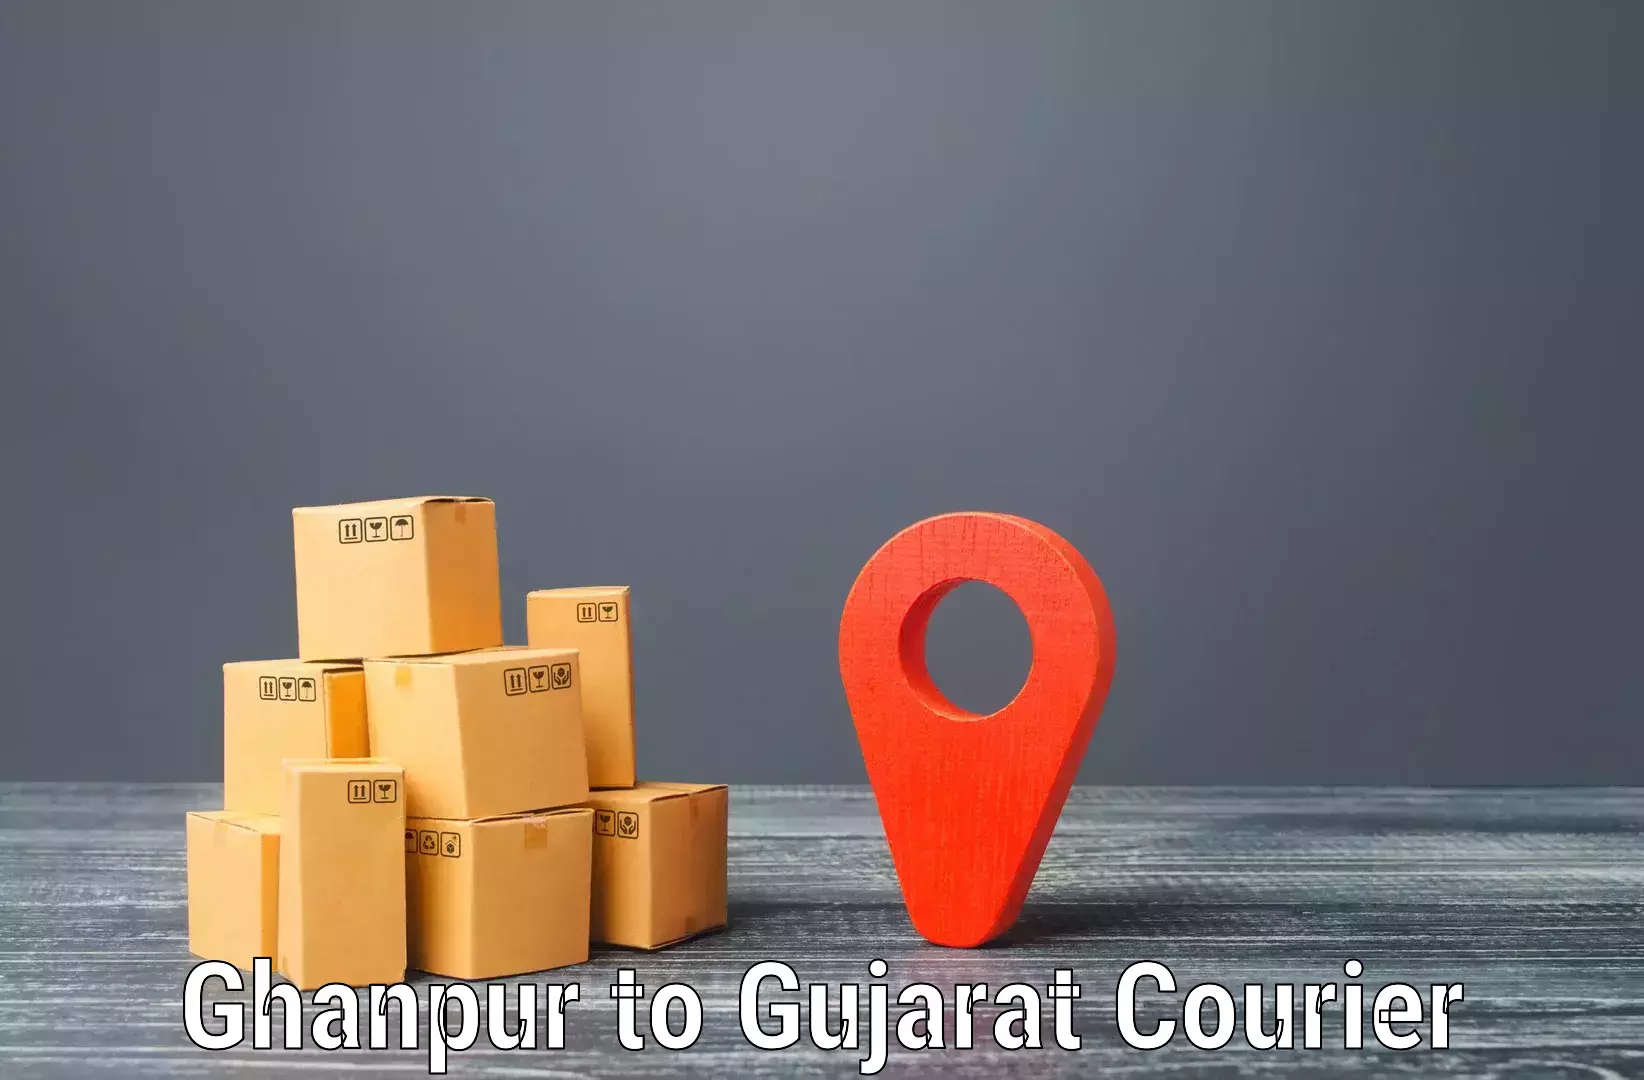 Logistics service provider Ghanpur to Jhagadia